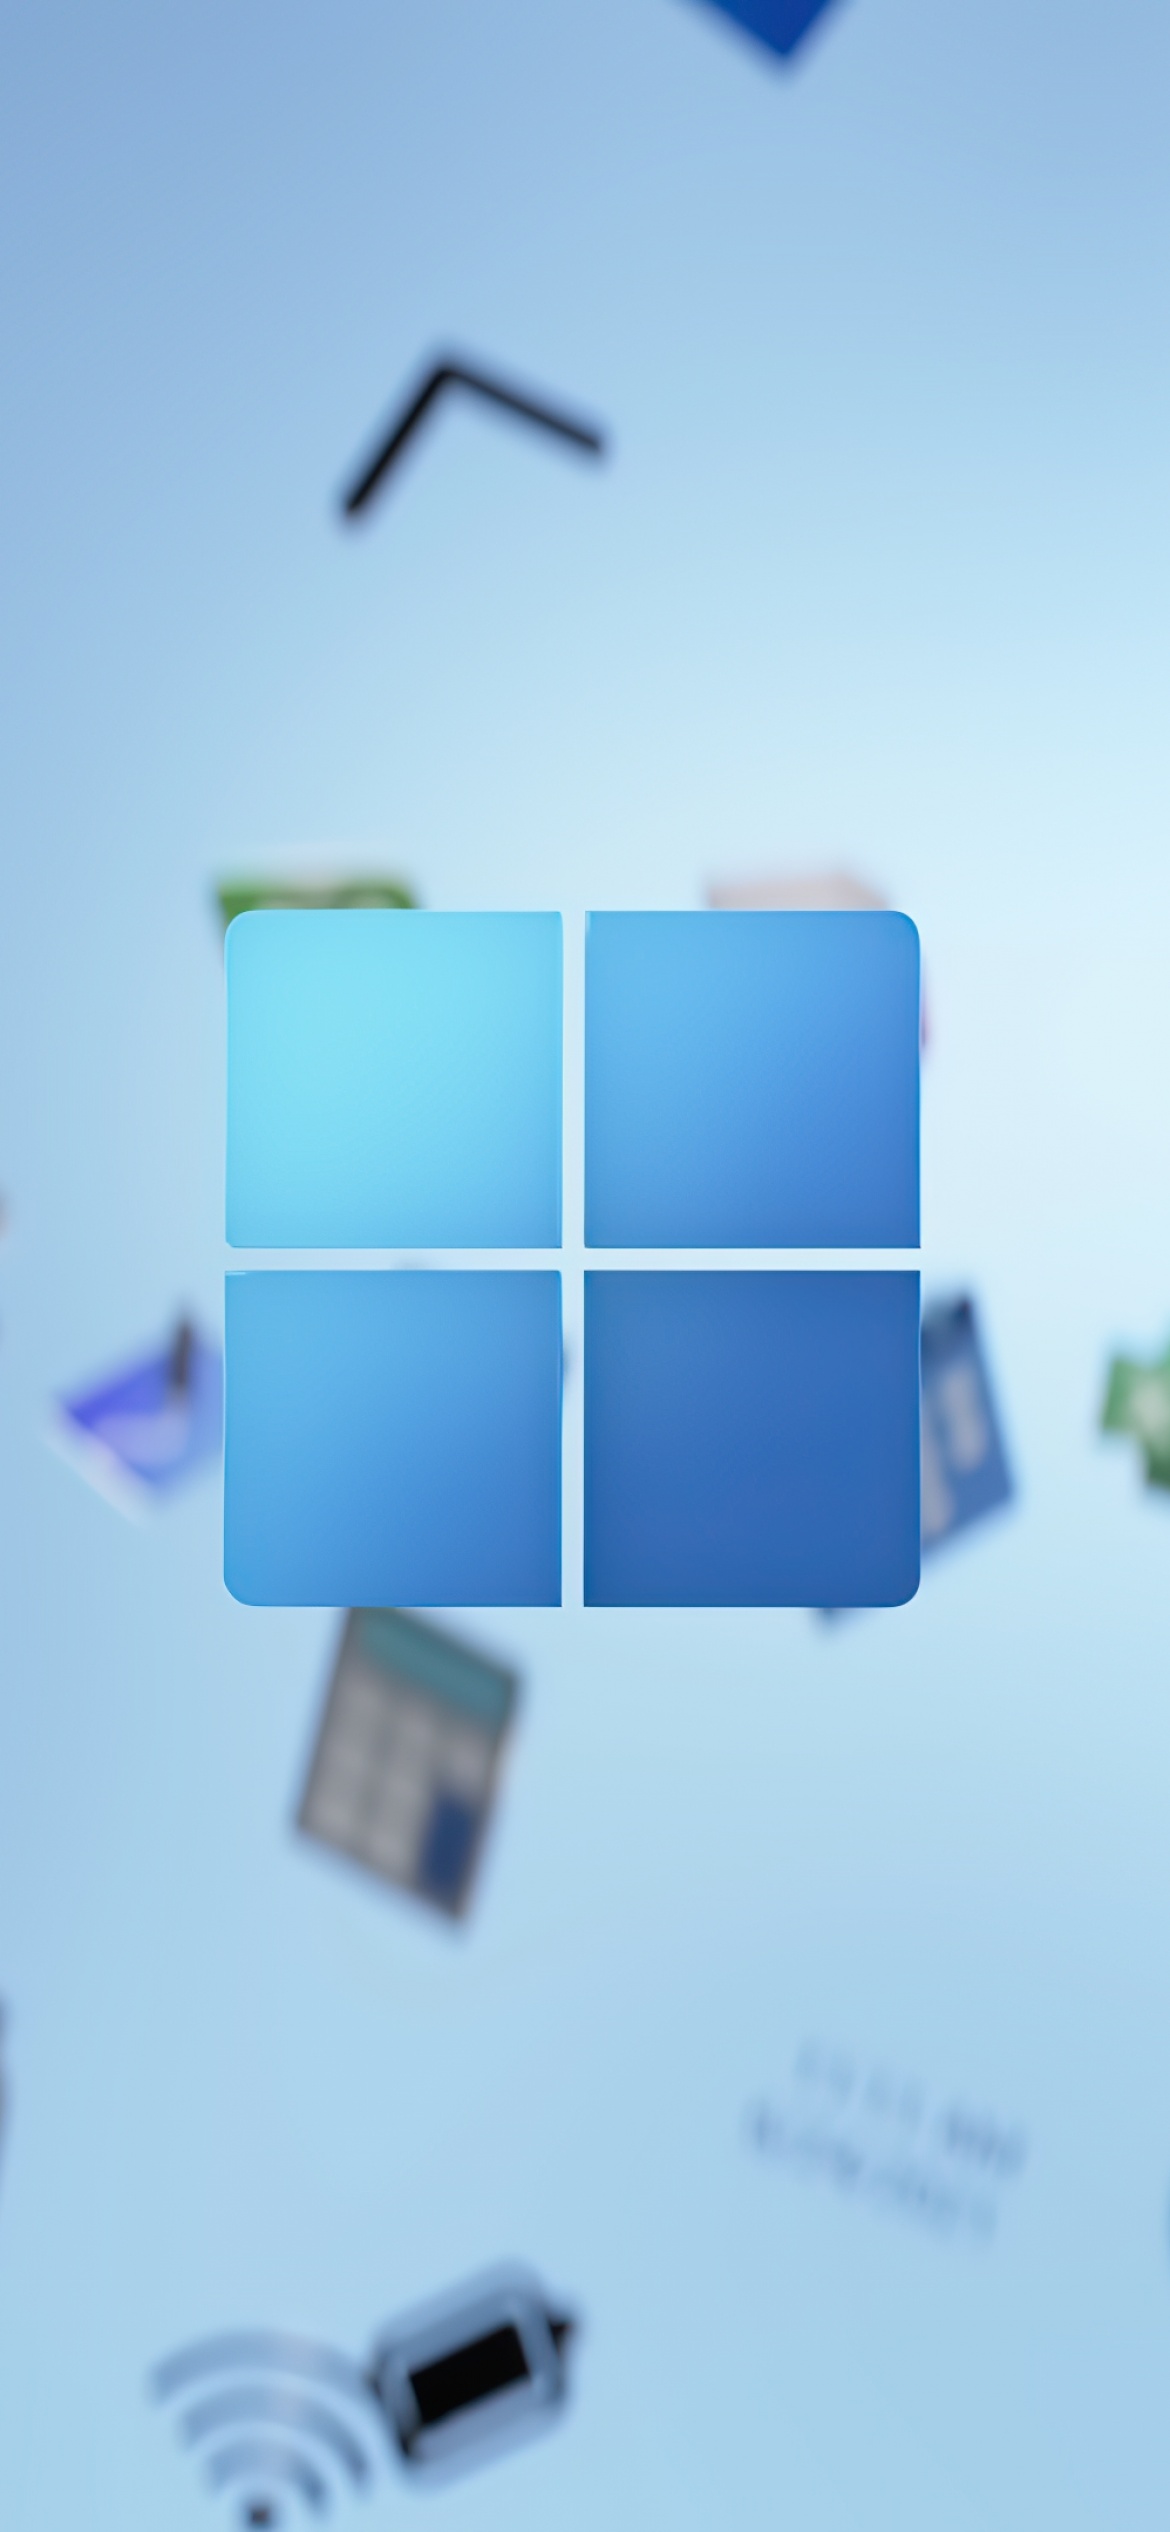 Windows 11 Wallpaper 4K, Stock, Official, Blue background, Apps, 2021